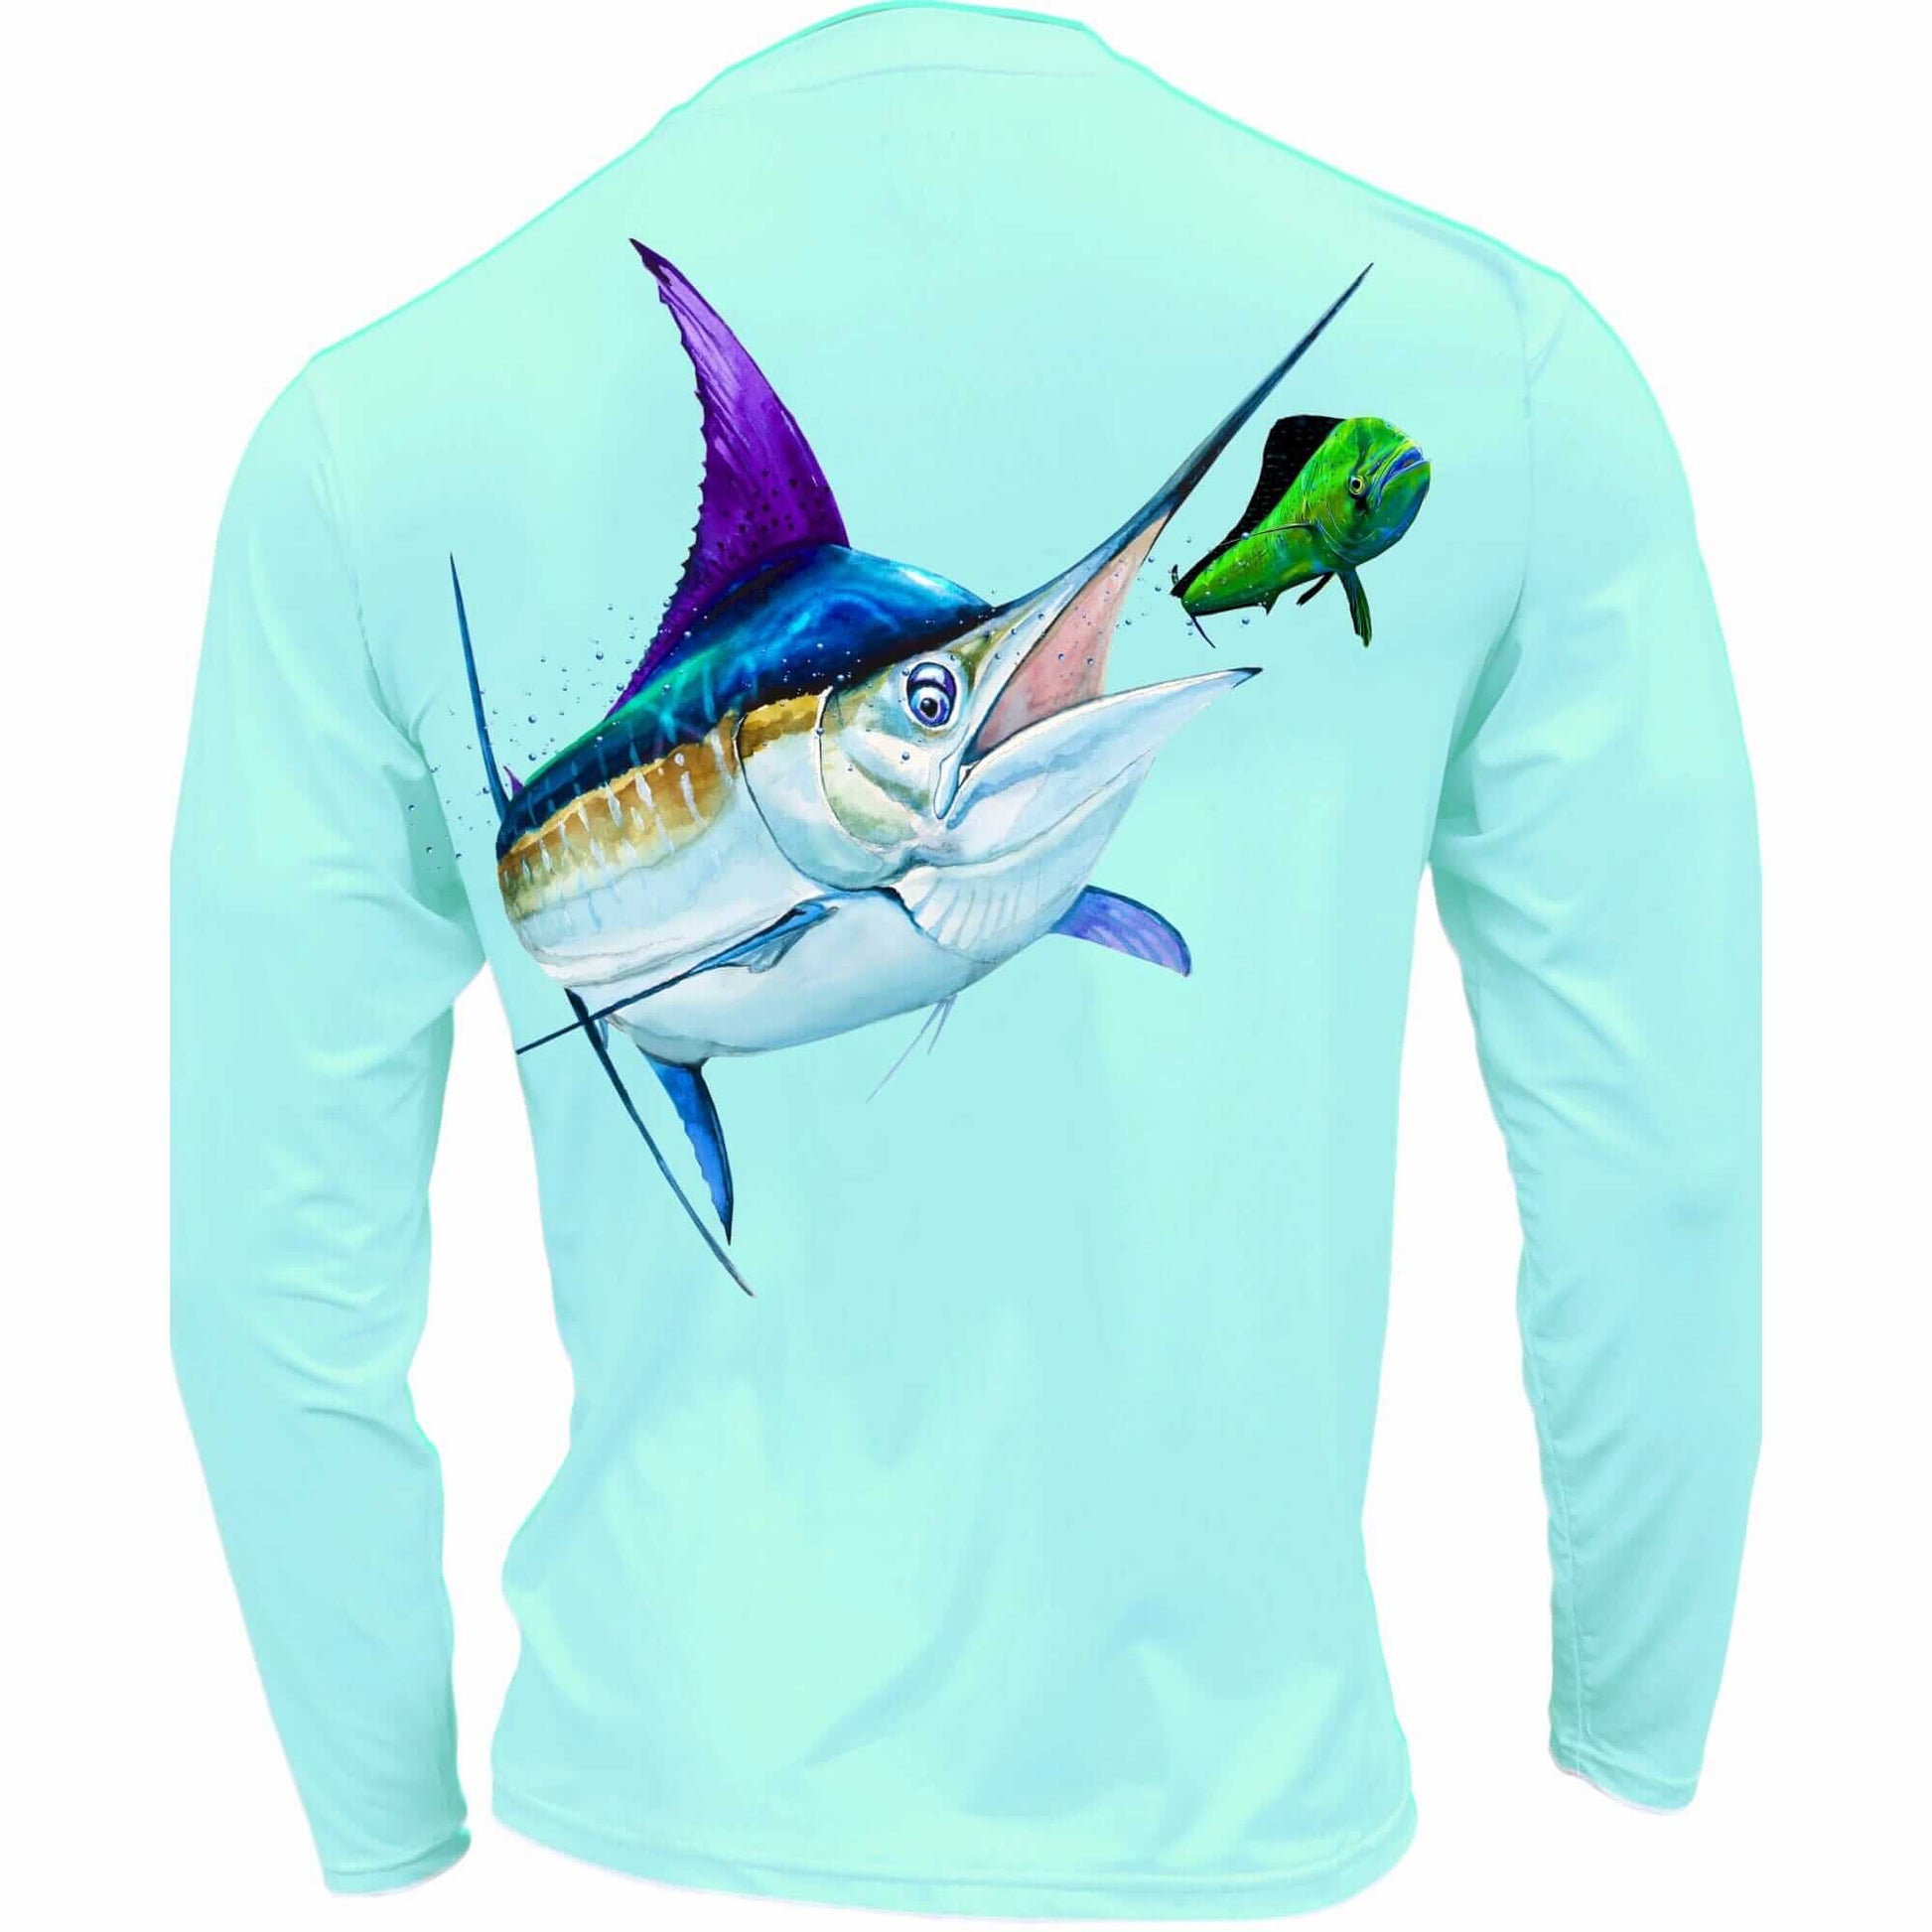 Men's Performance Shirt- Marlin on Mahi Men's SPF Ocean Fishing Tops Tormenter Ocean 